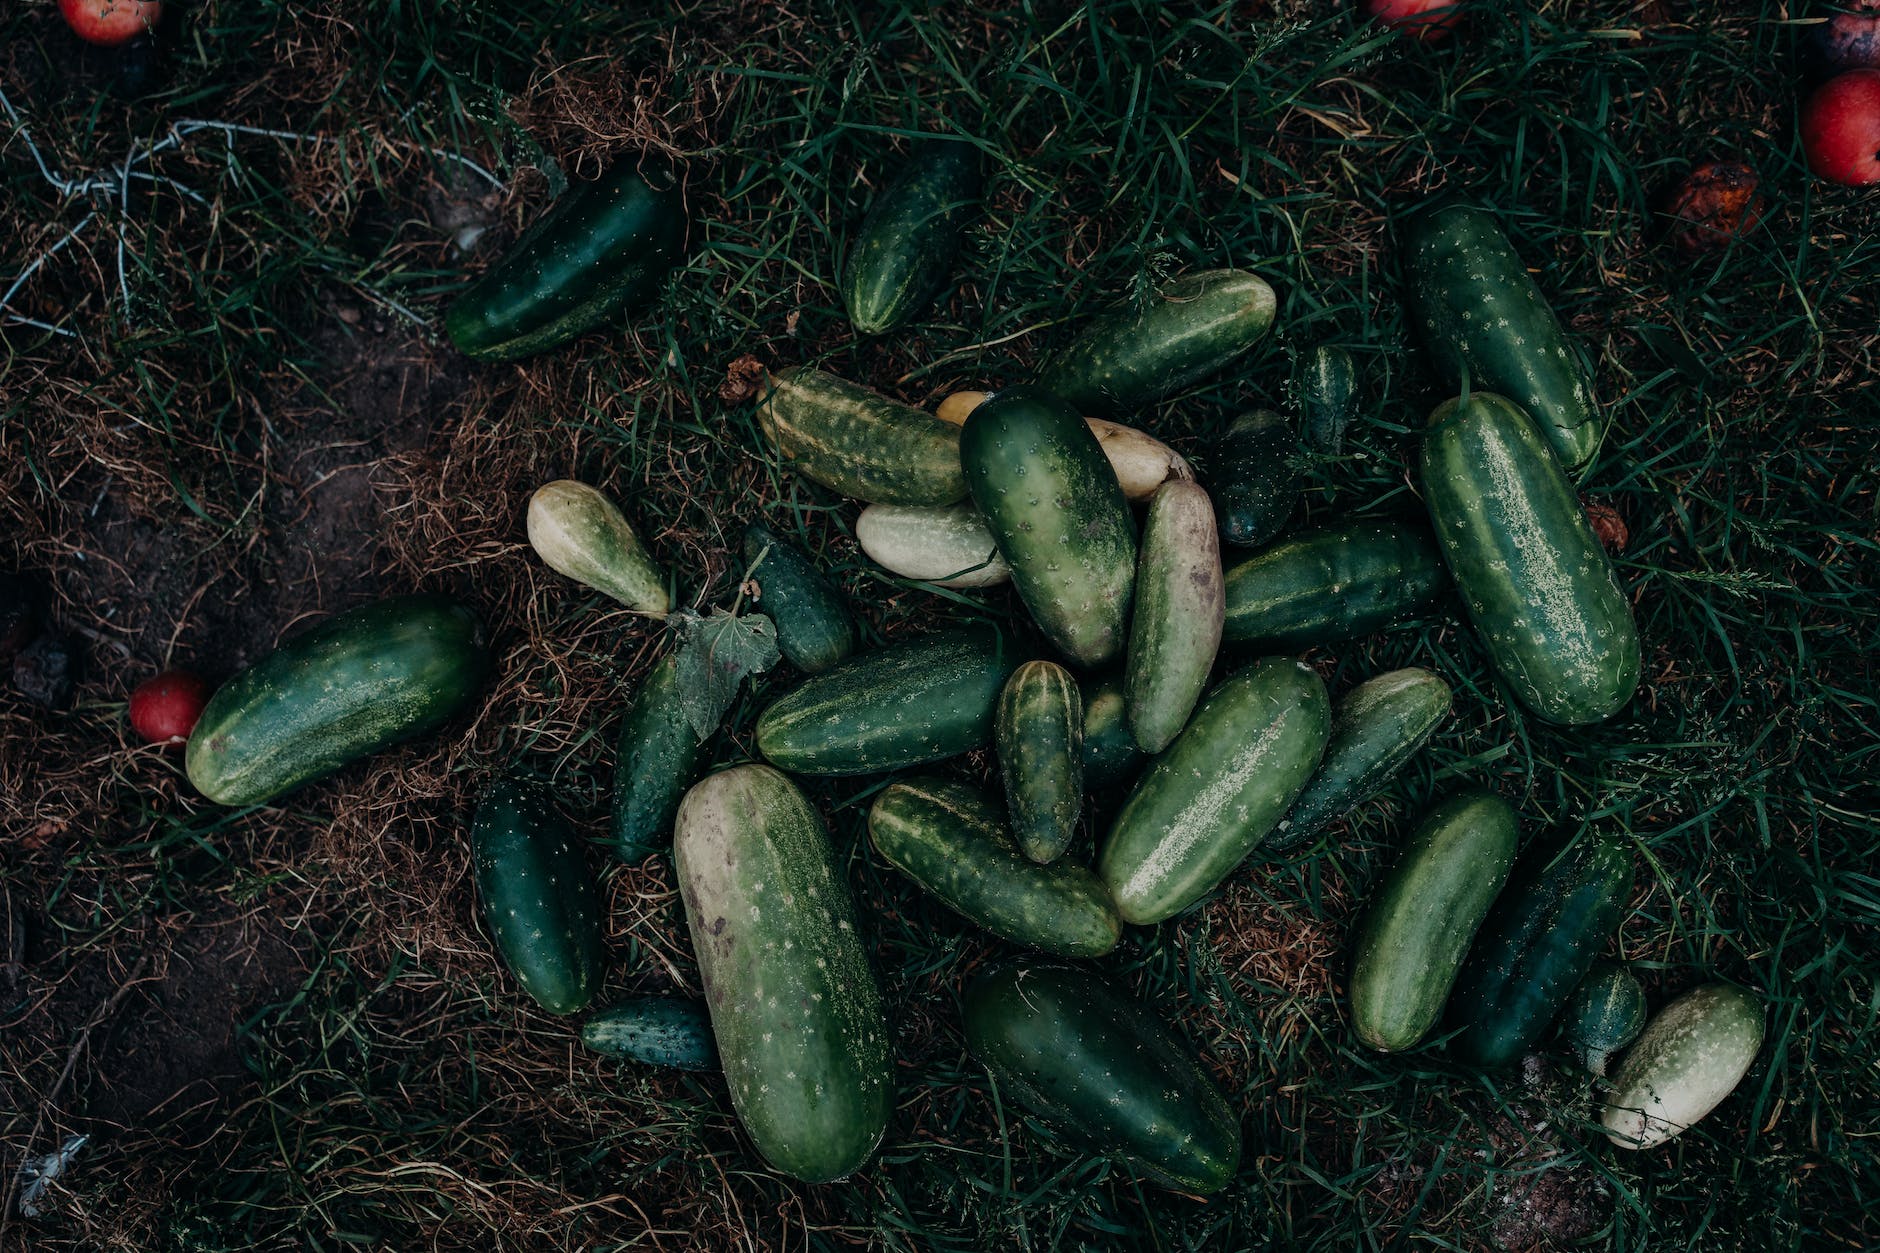 green cucumbers on grass